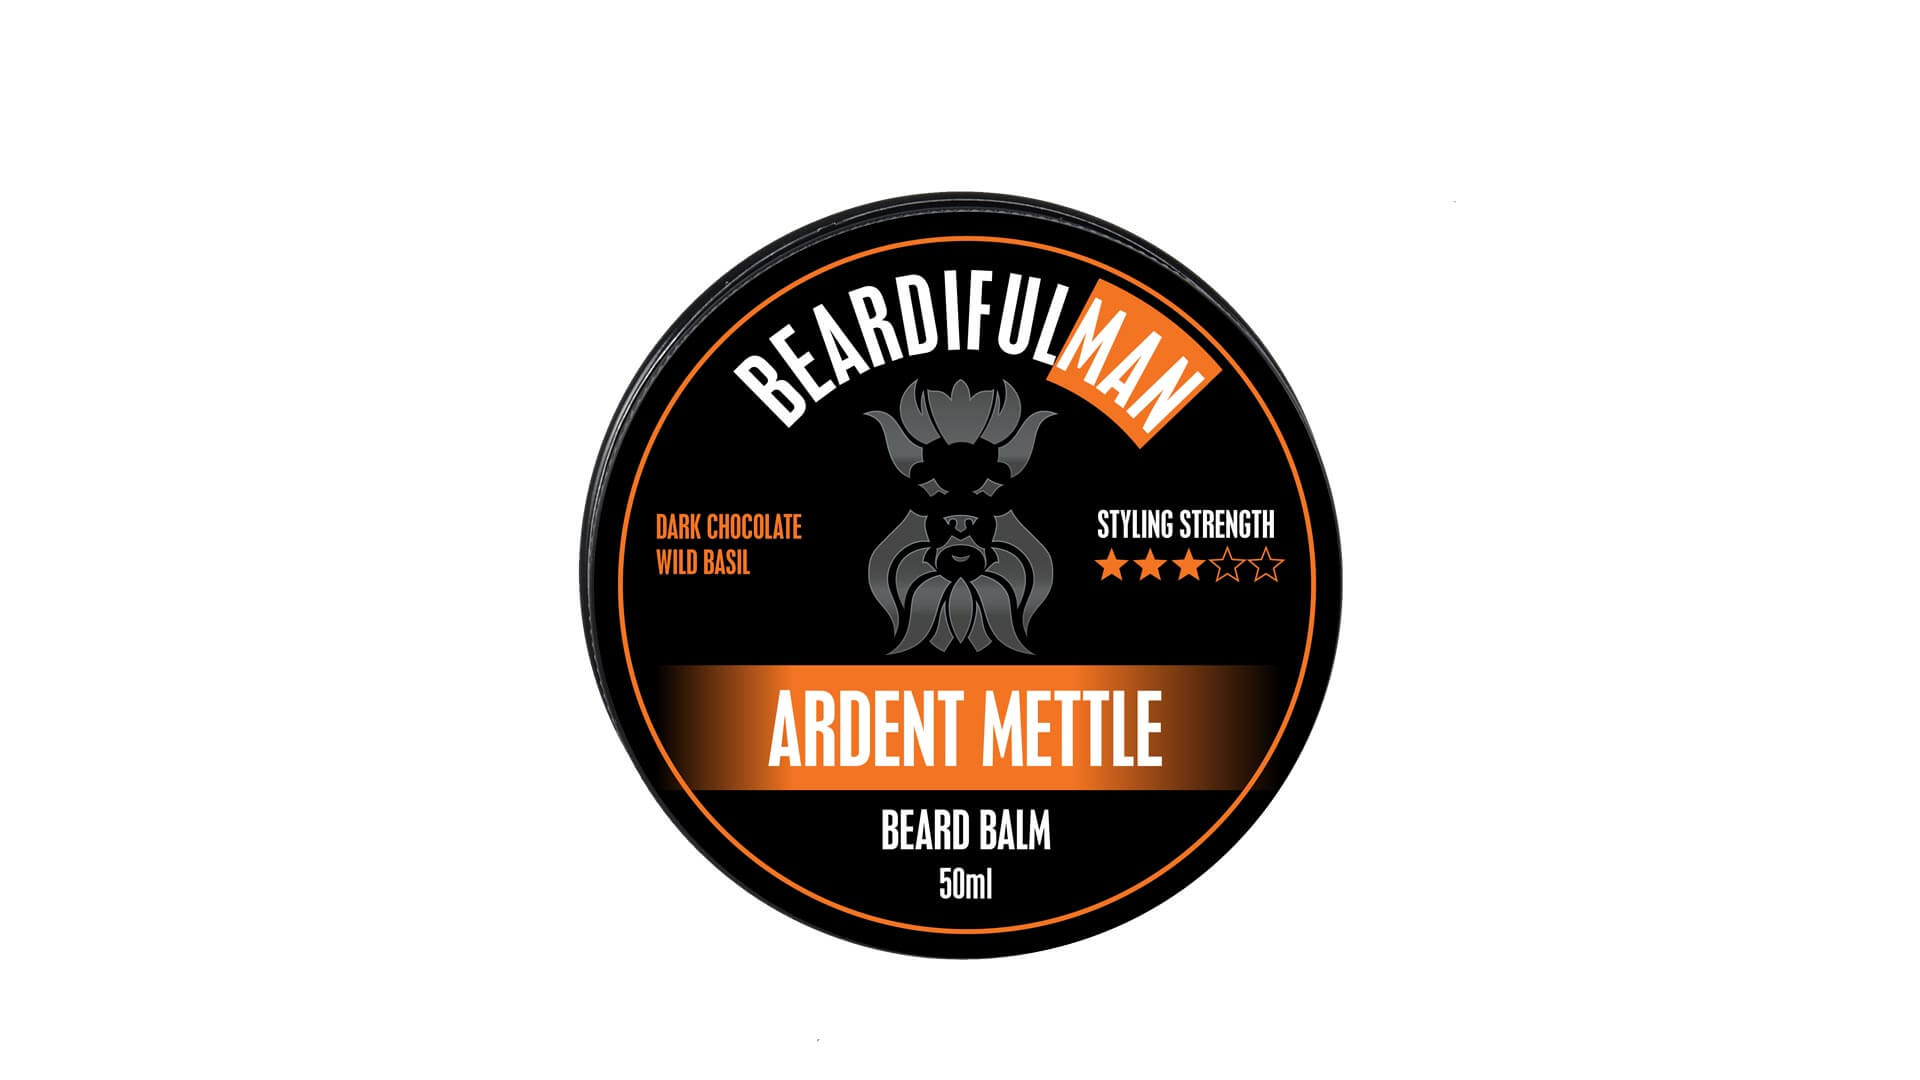 Single 50ml tin of Ardent Mettle premium quality beard balm from Beardifulman